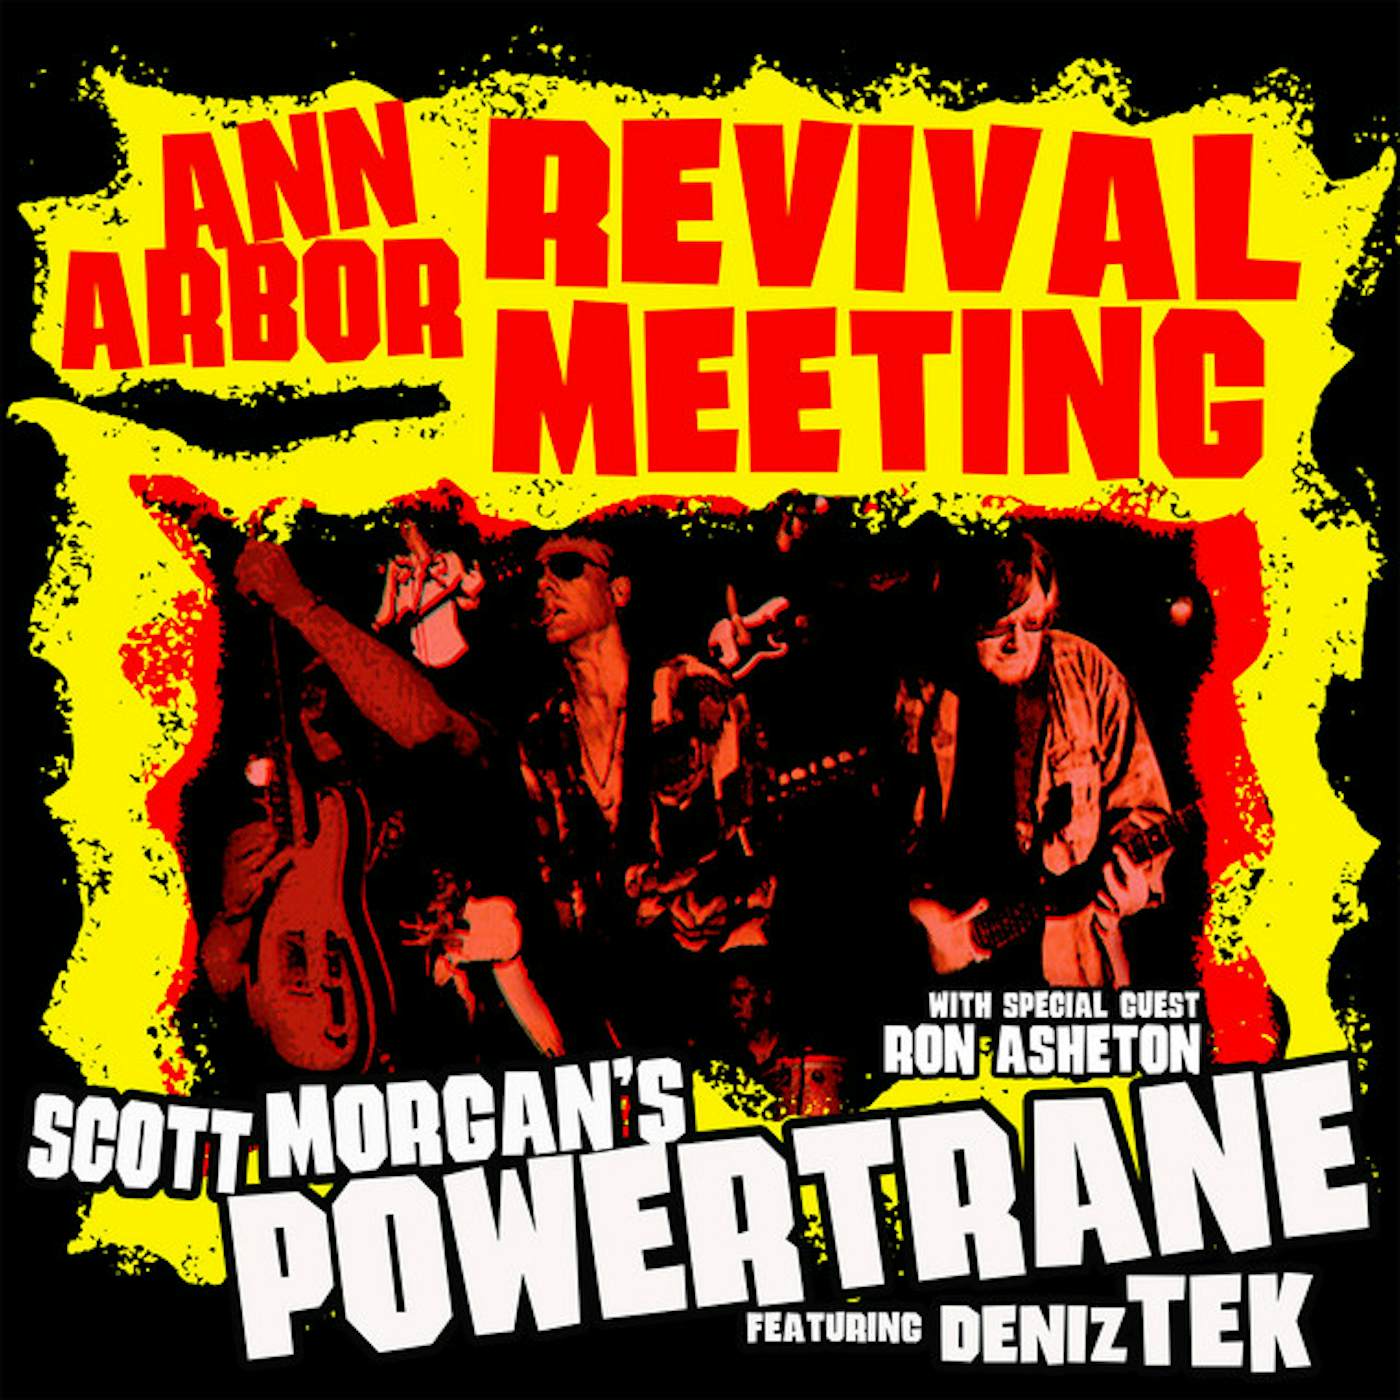 Scott Morgan / Powertrane ANN ARBOR REVIVAL MEETING CD